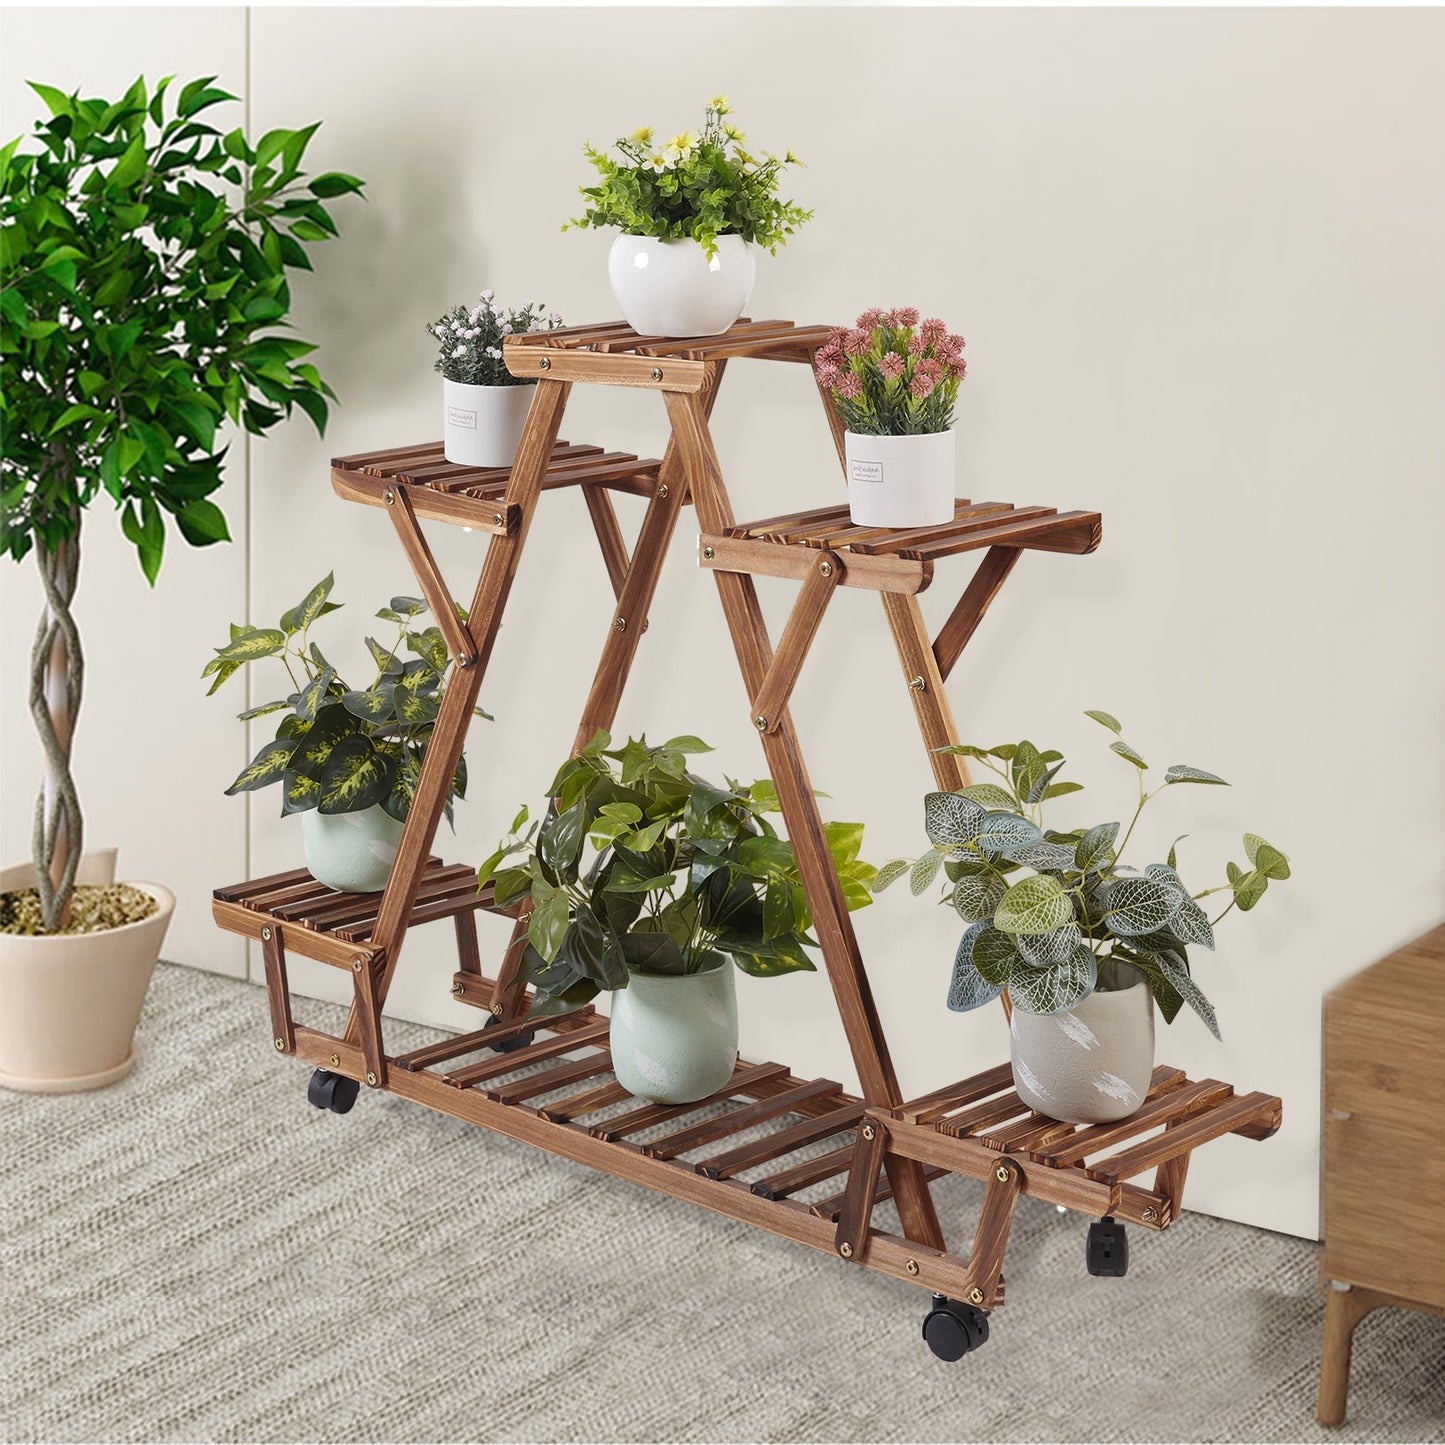 6 Shelf Triangular Plant Stand with Wheels